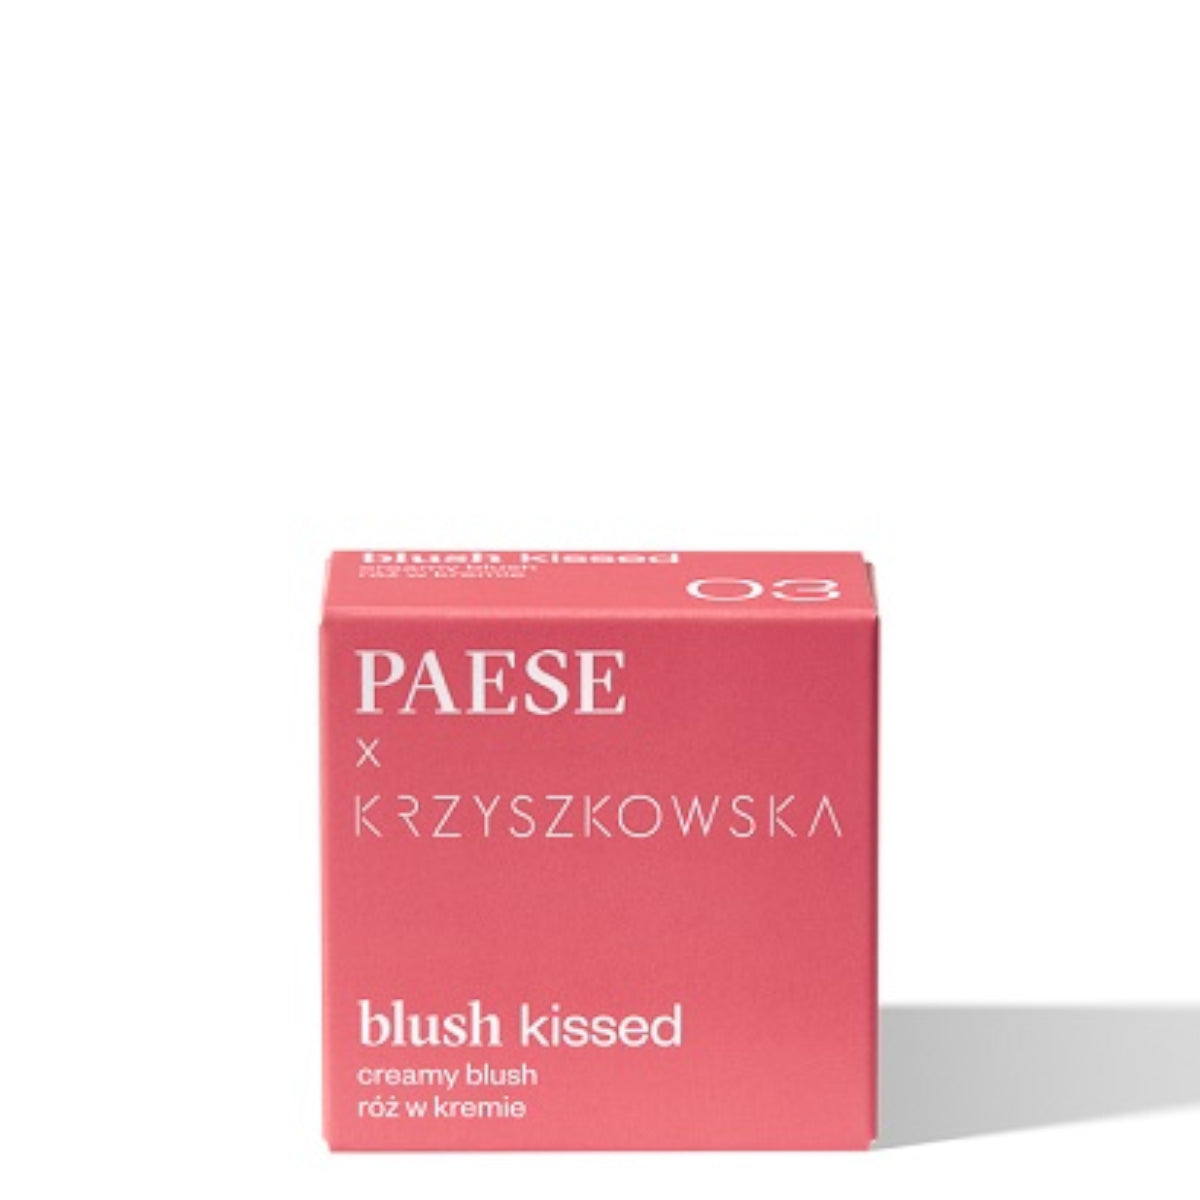 Paese Creamy Blush Blush Kissed x Krzyszkowska Box